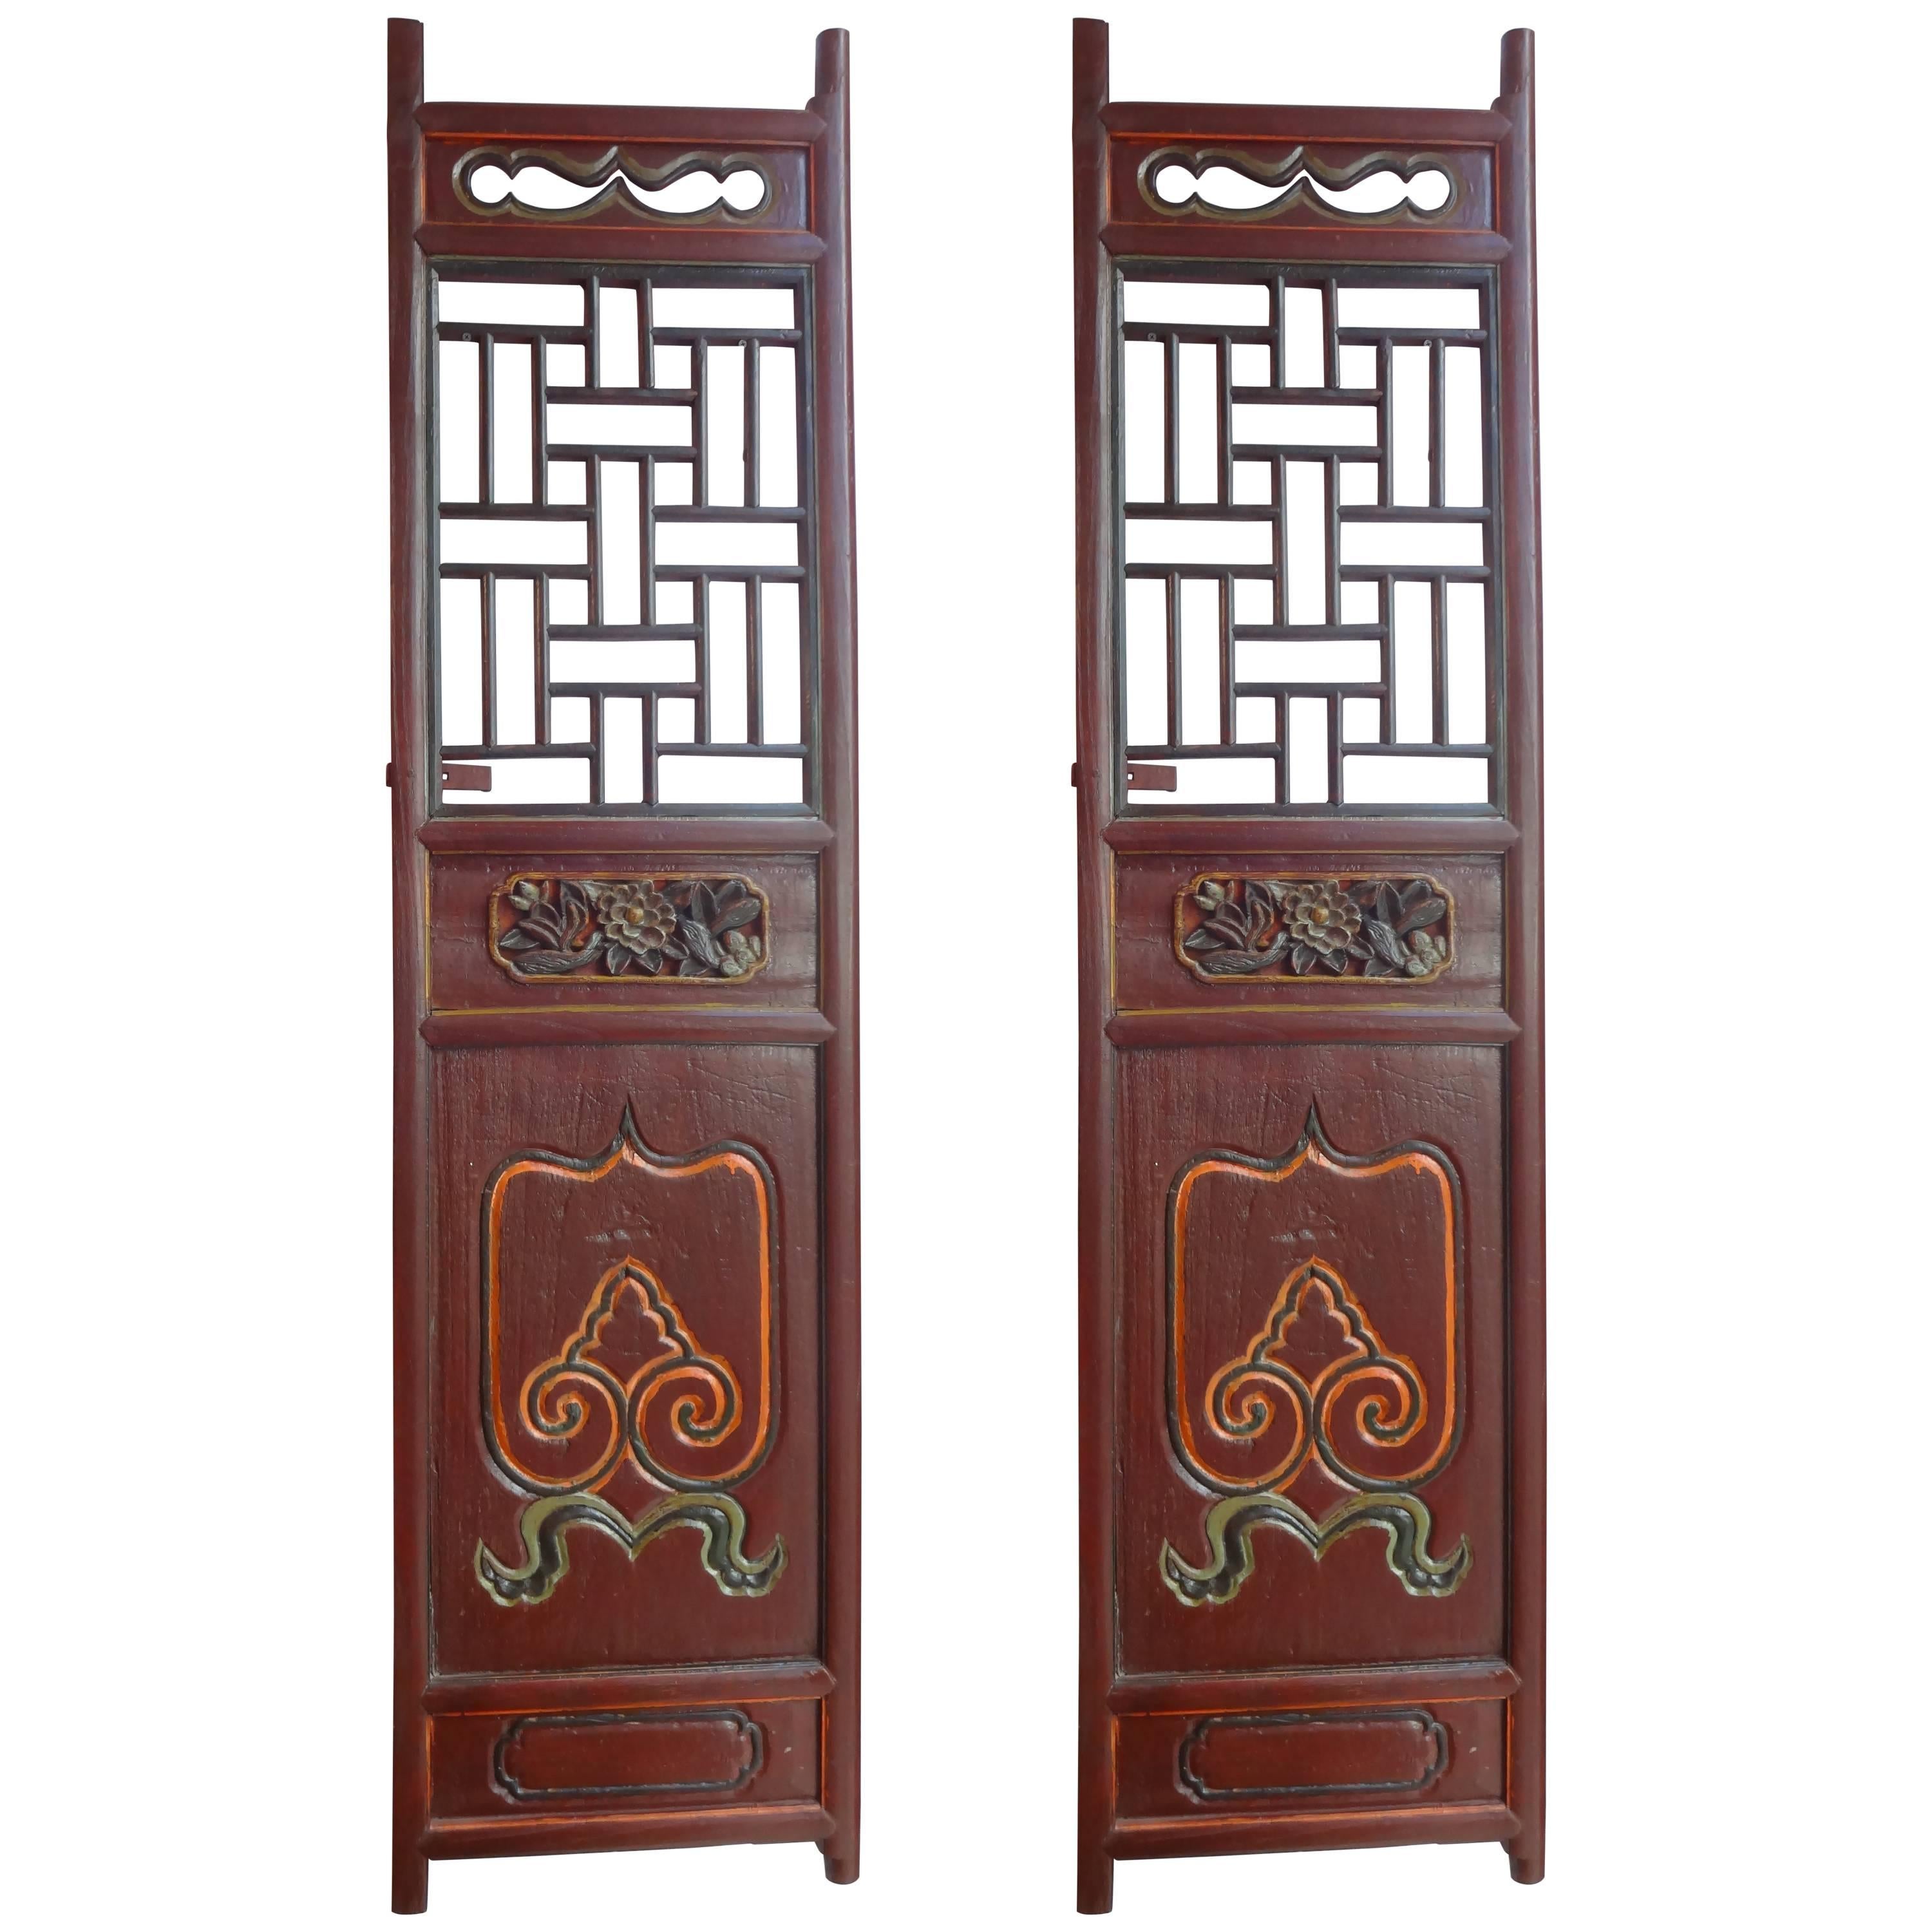 Pair of Chinese Screen Doors